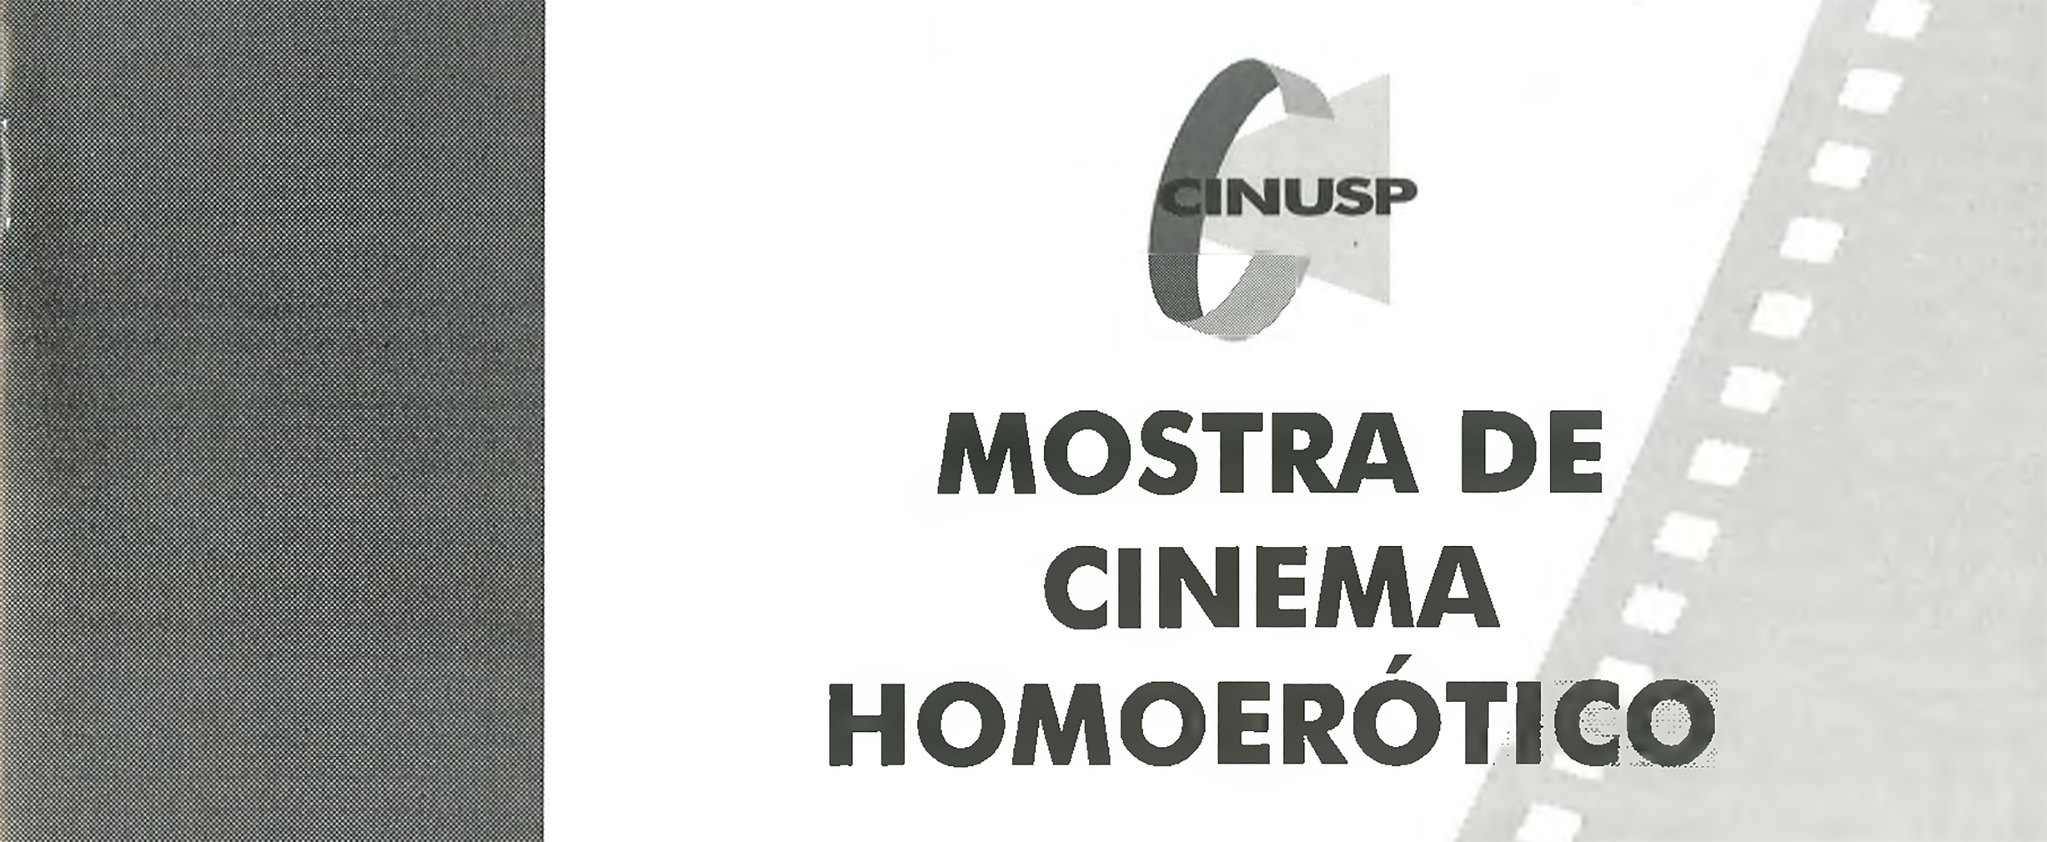 Cinema Homoerótico